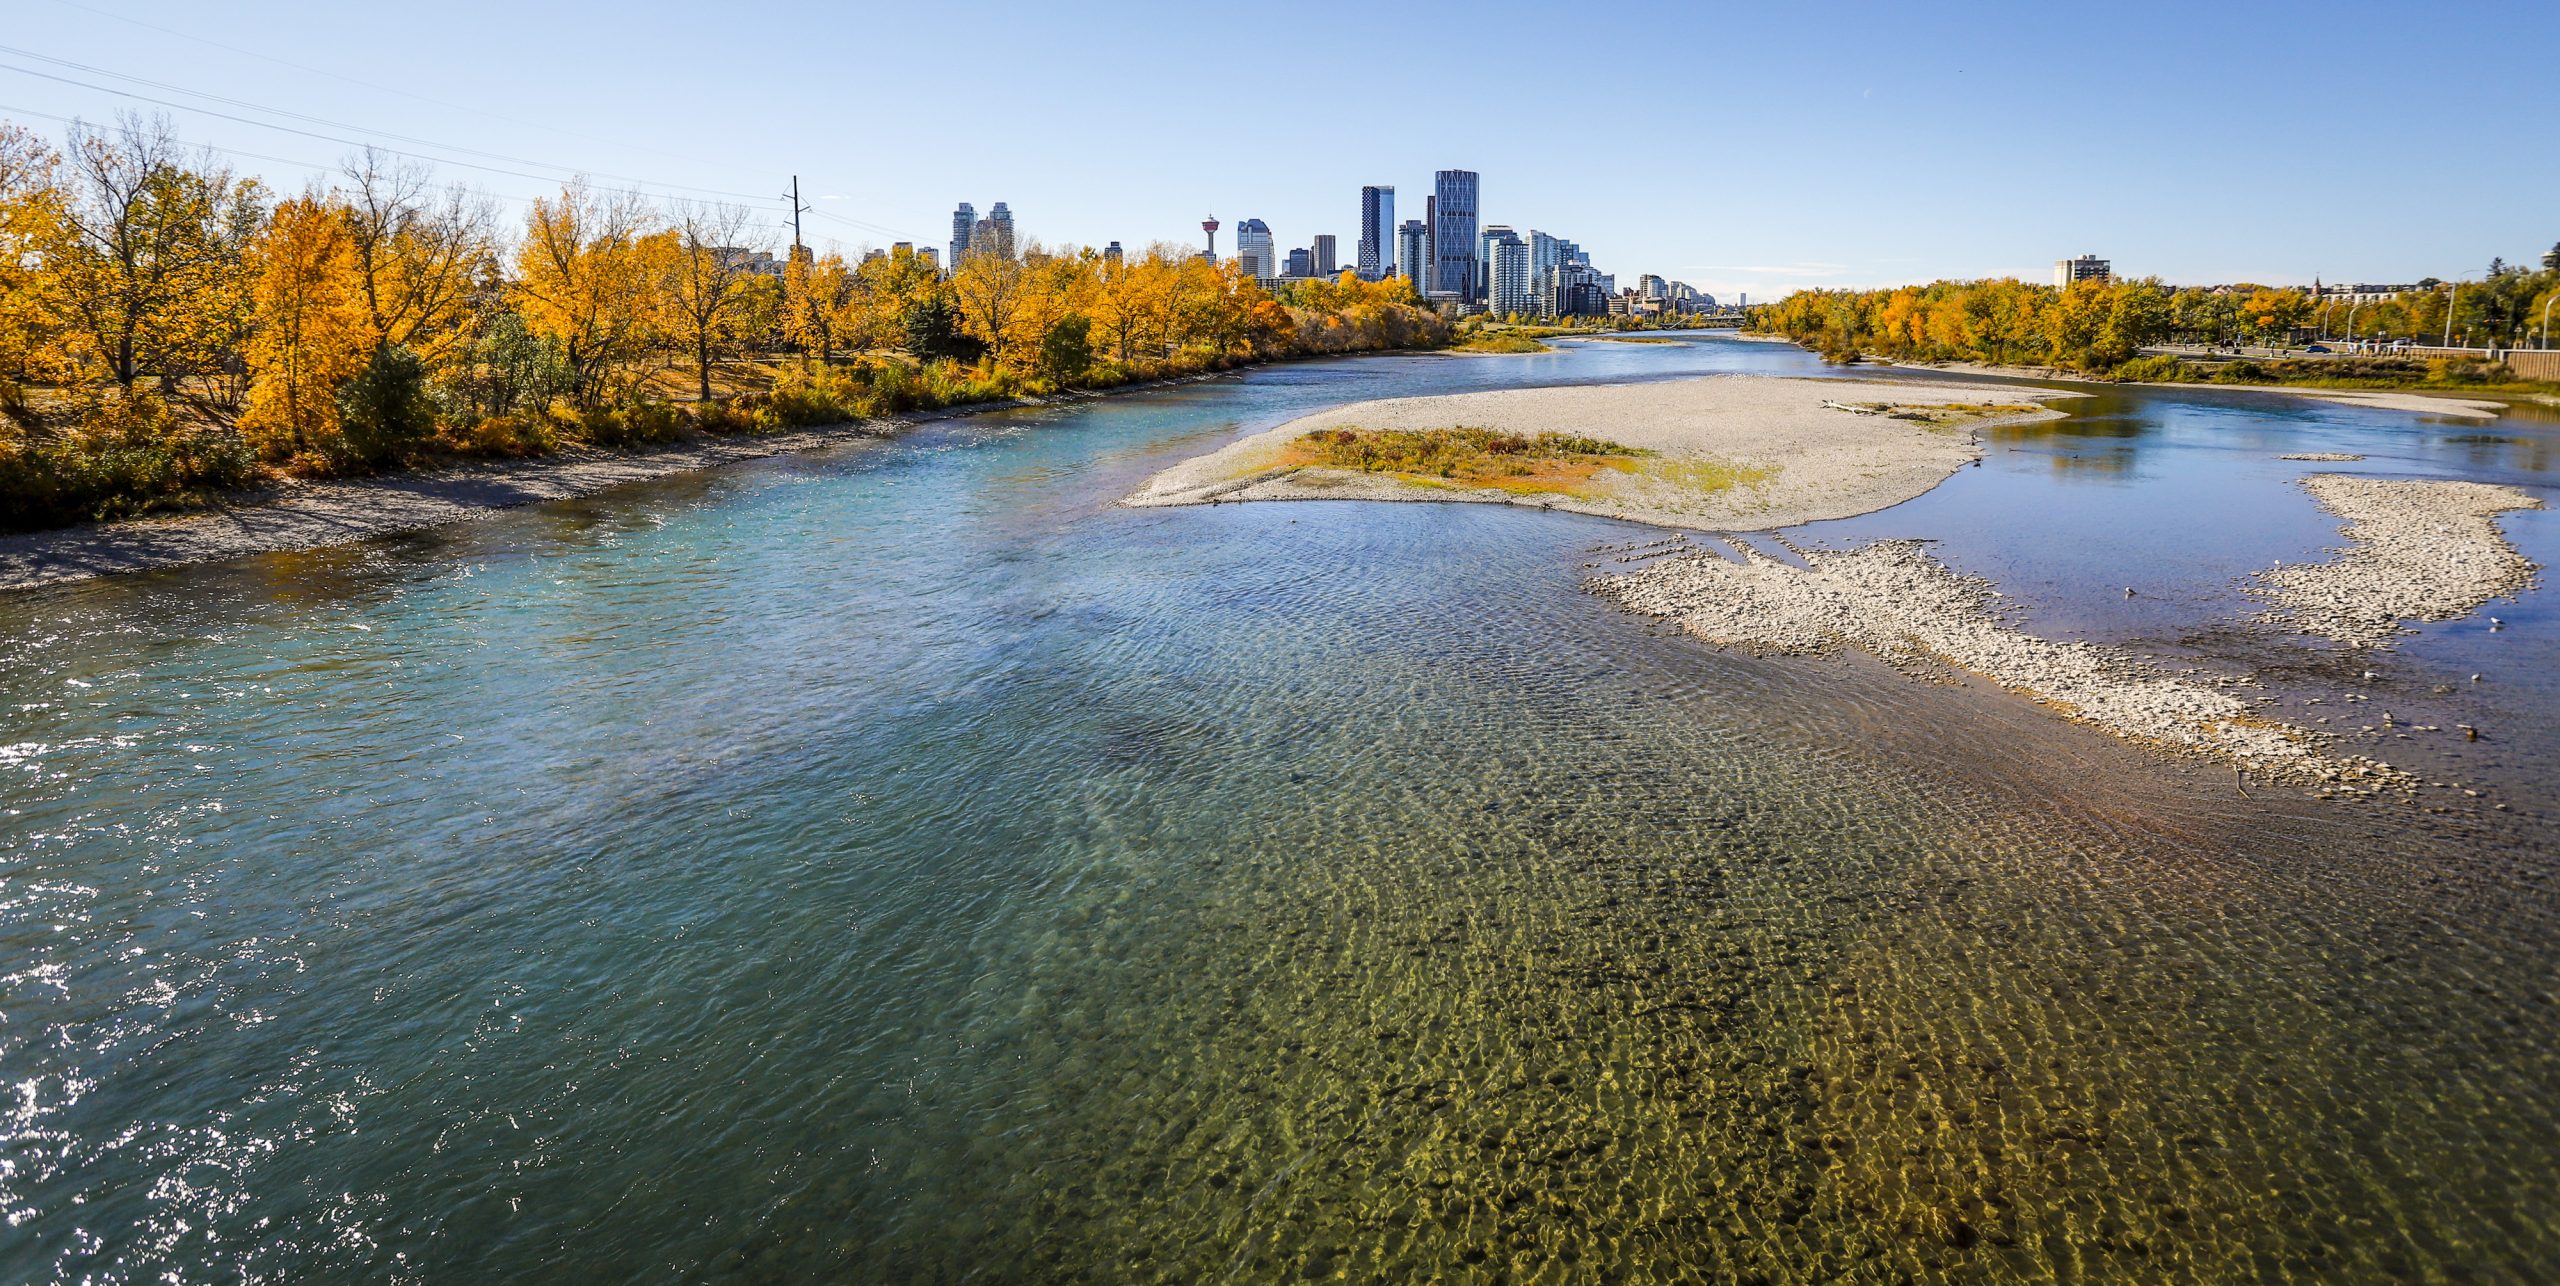 The Bow River flows through downtown Calgary